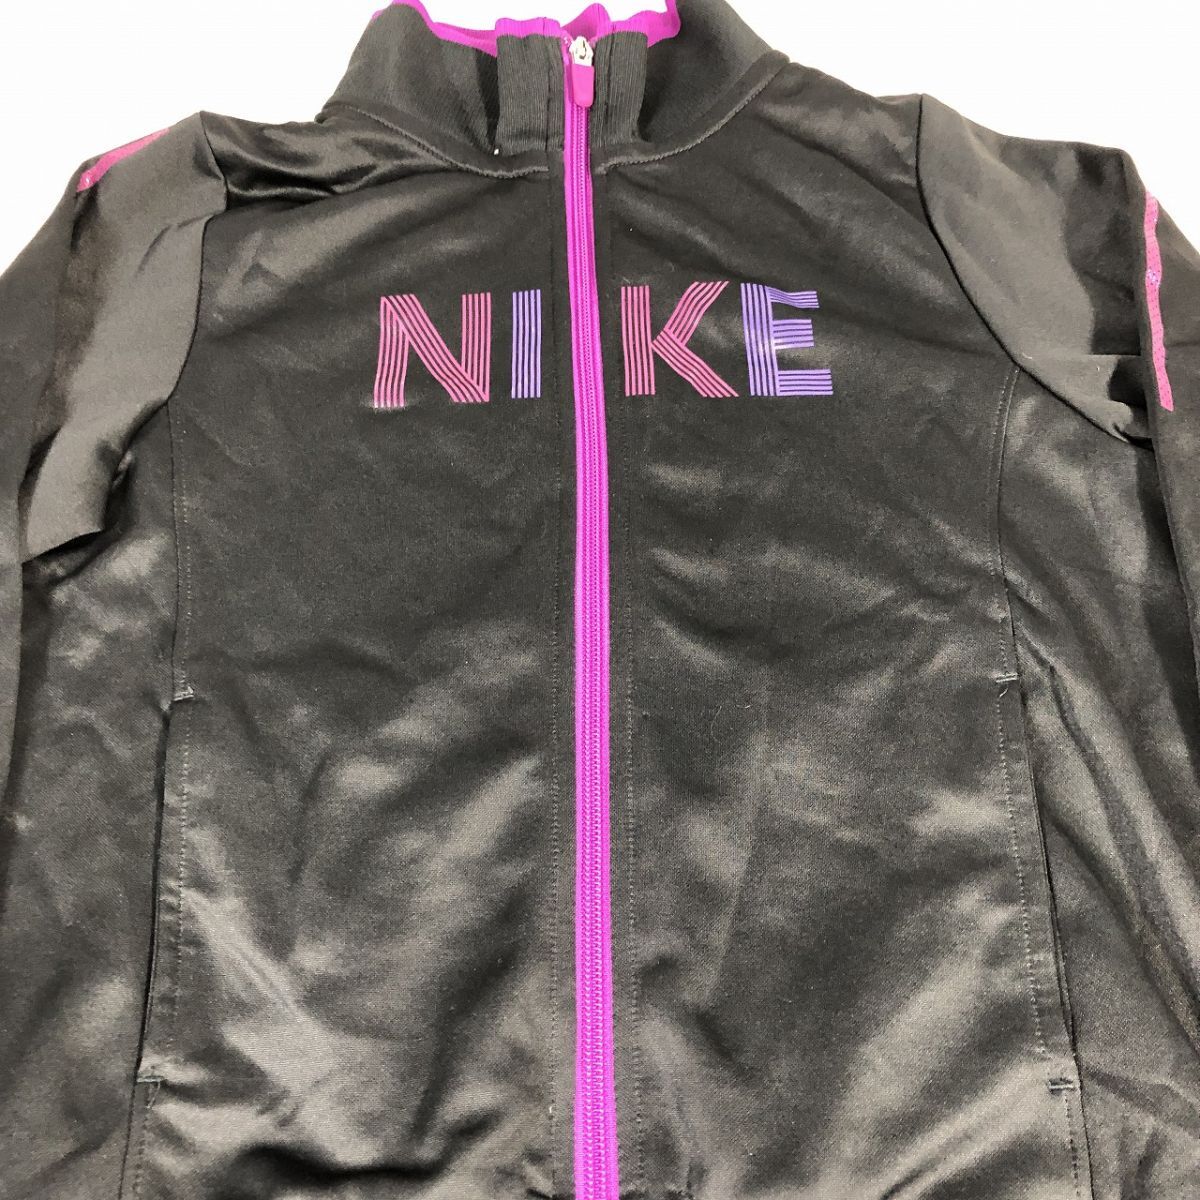  Nike NIKE nylon jersey pants top and bottom men's M black X purple beautiful goods 